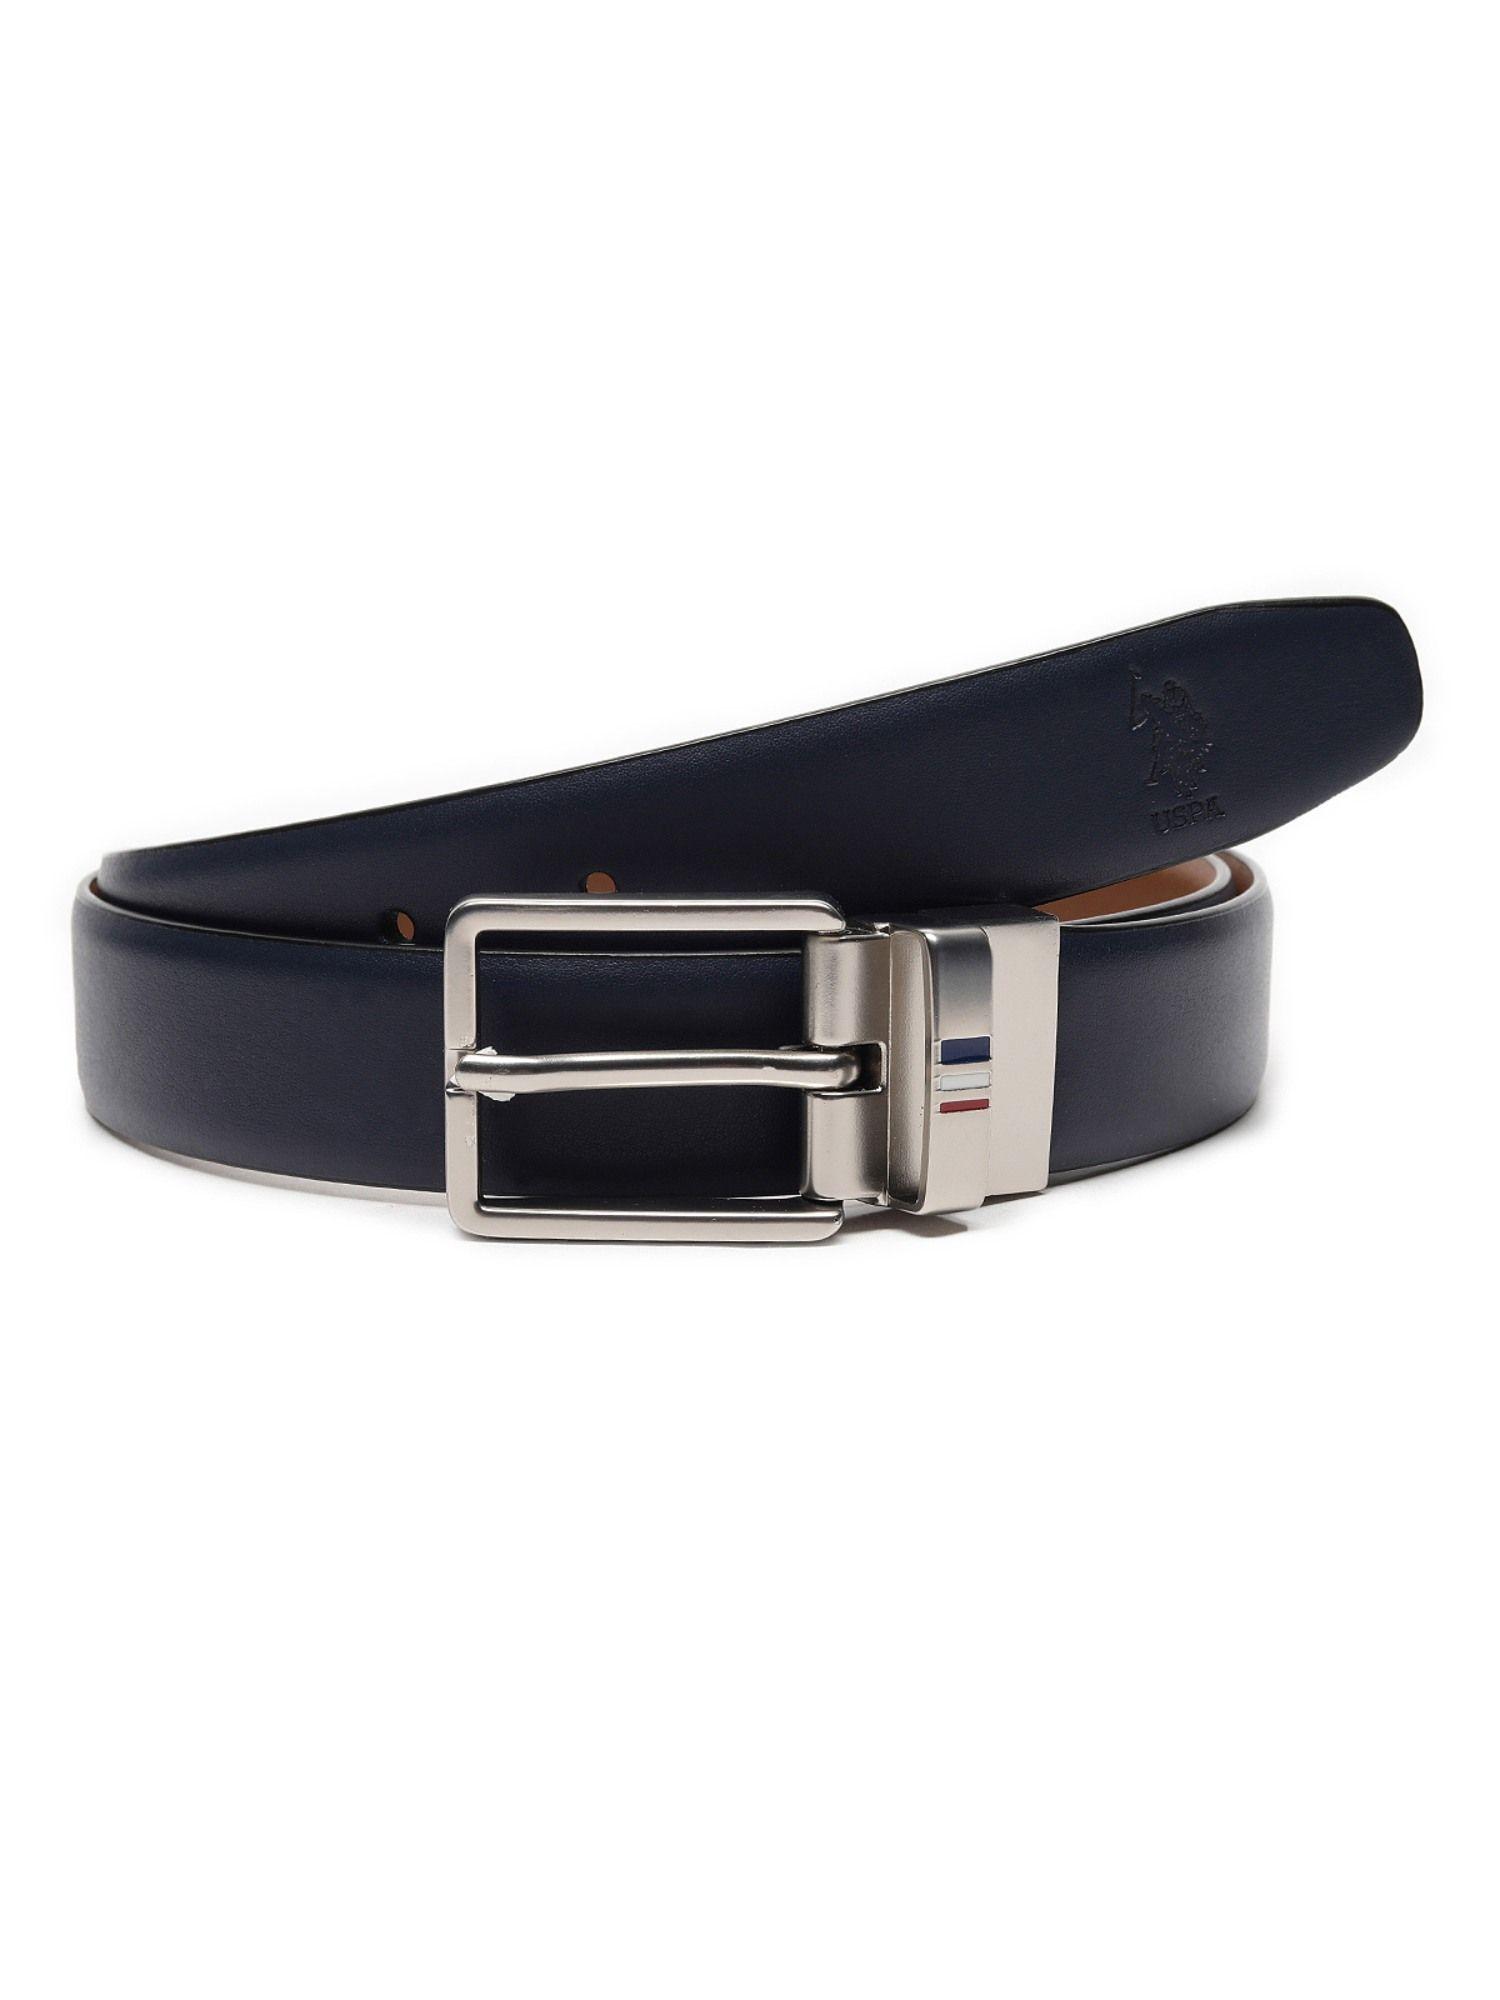 verona men's black and brown reversible belt